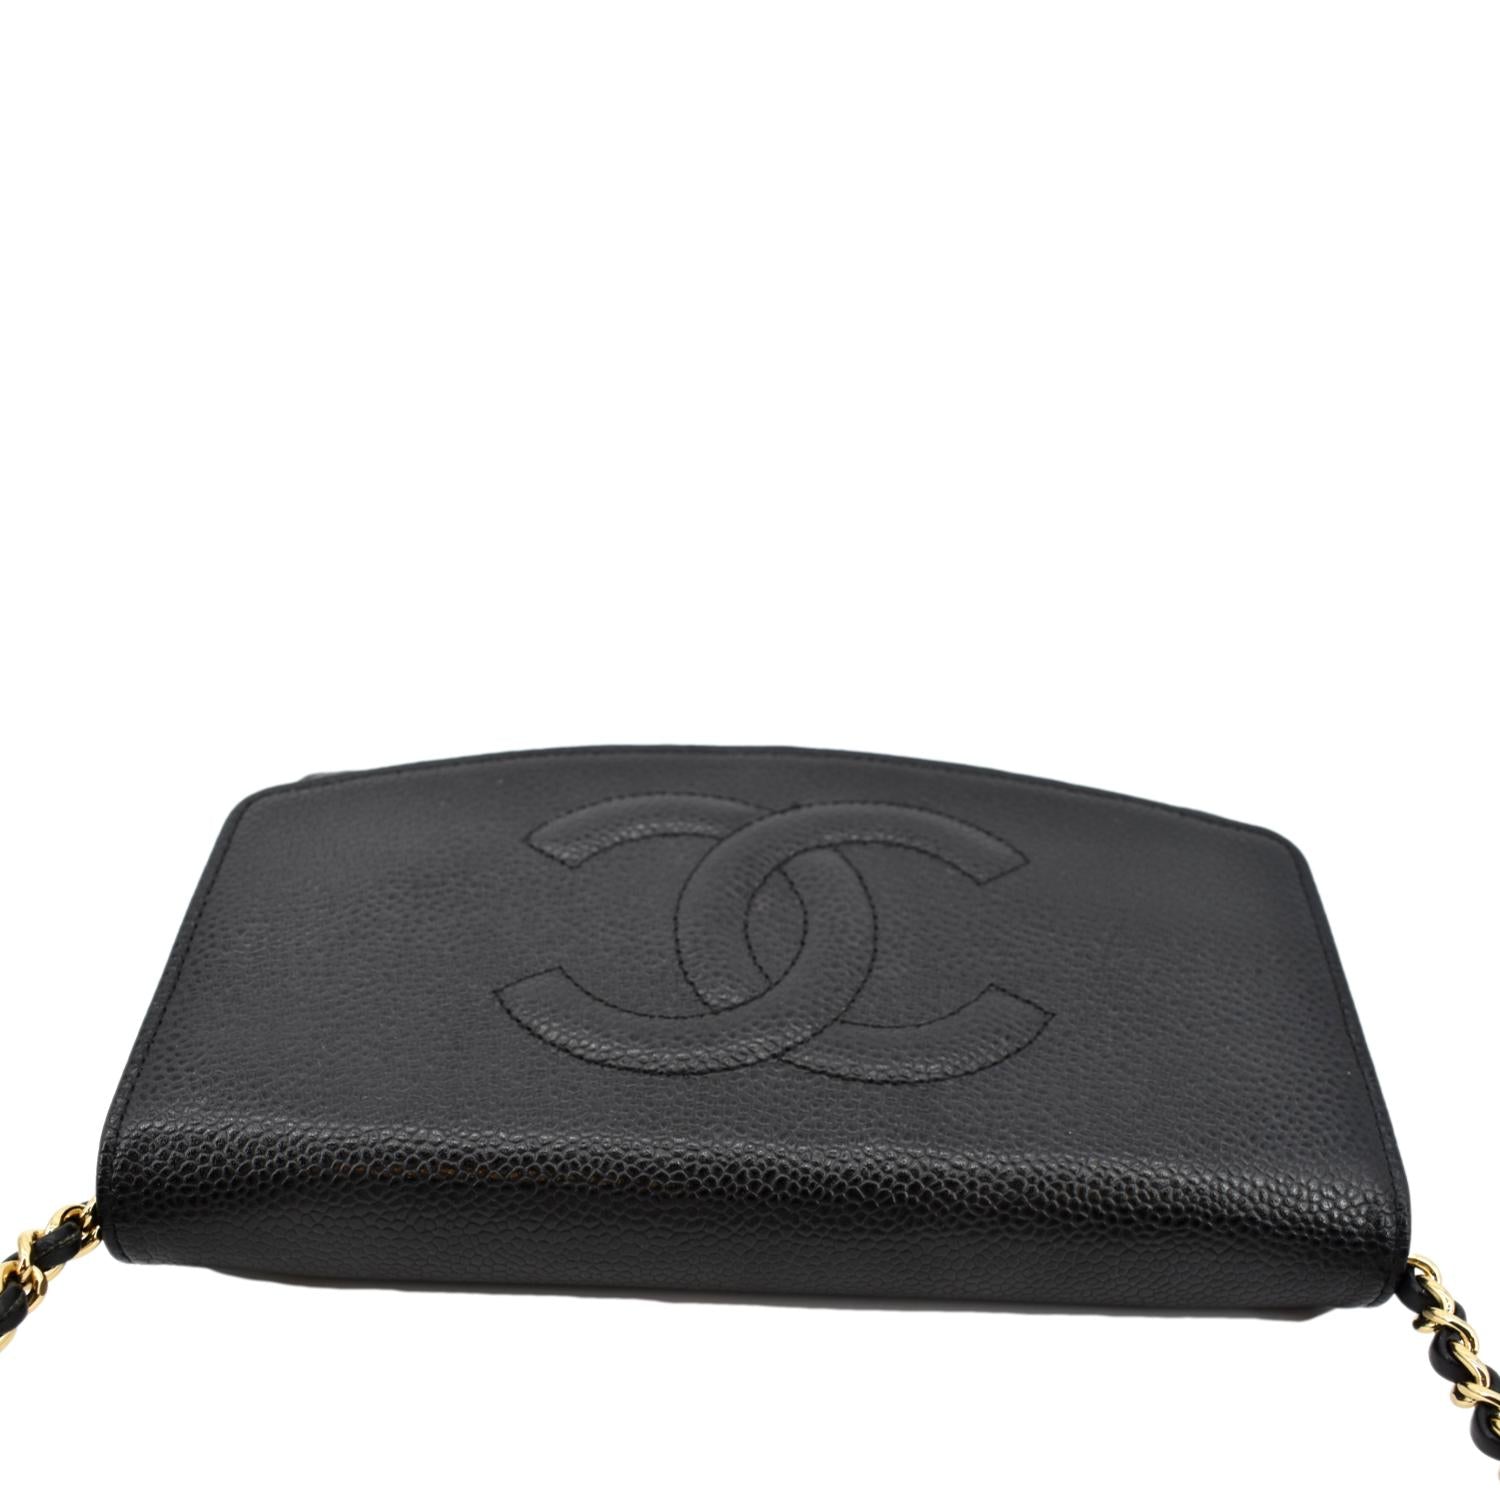 Chanel Timeless WOC Caviar Leather Wallet Shoulder Bag